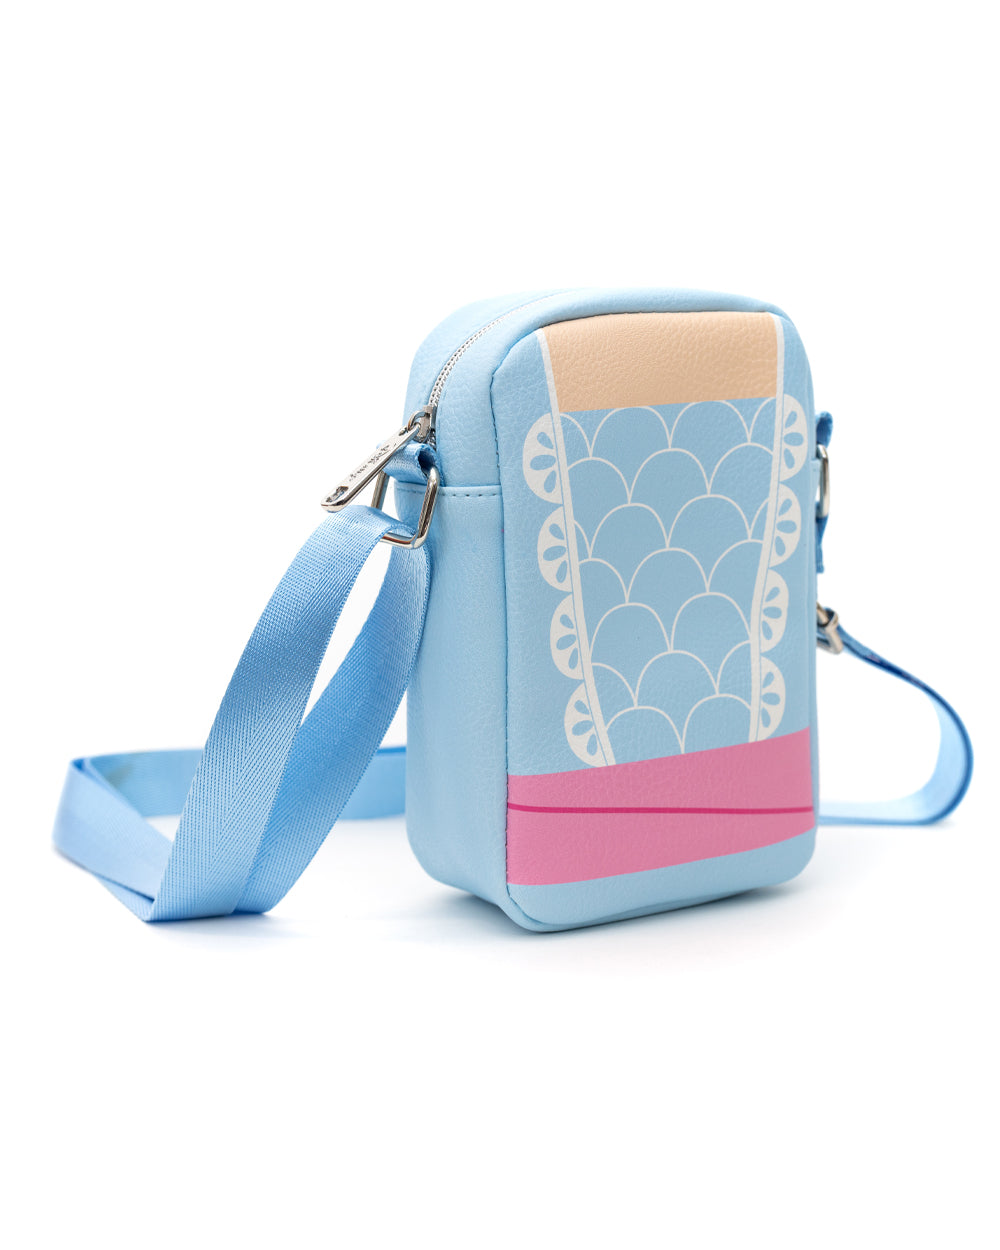 Disney Stitch Crossbody Bag Purse Zipper Round Blue Kids Girls 5.5 Small